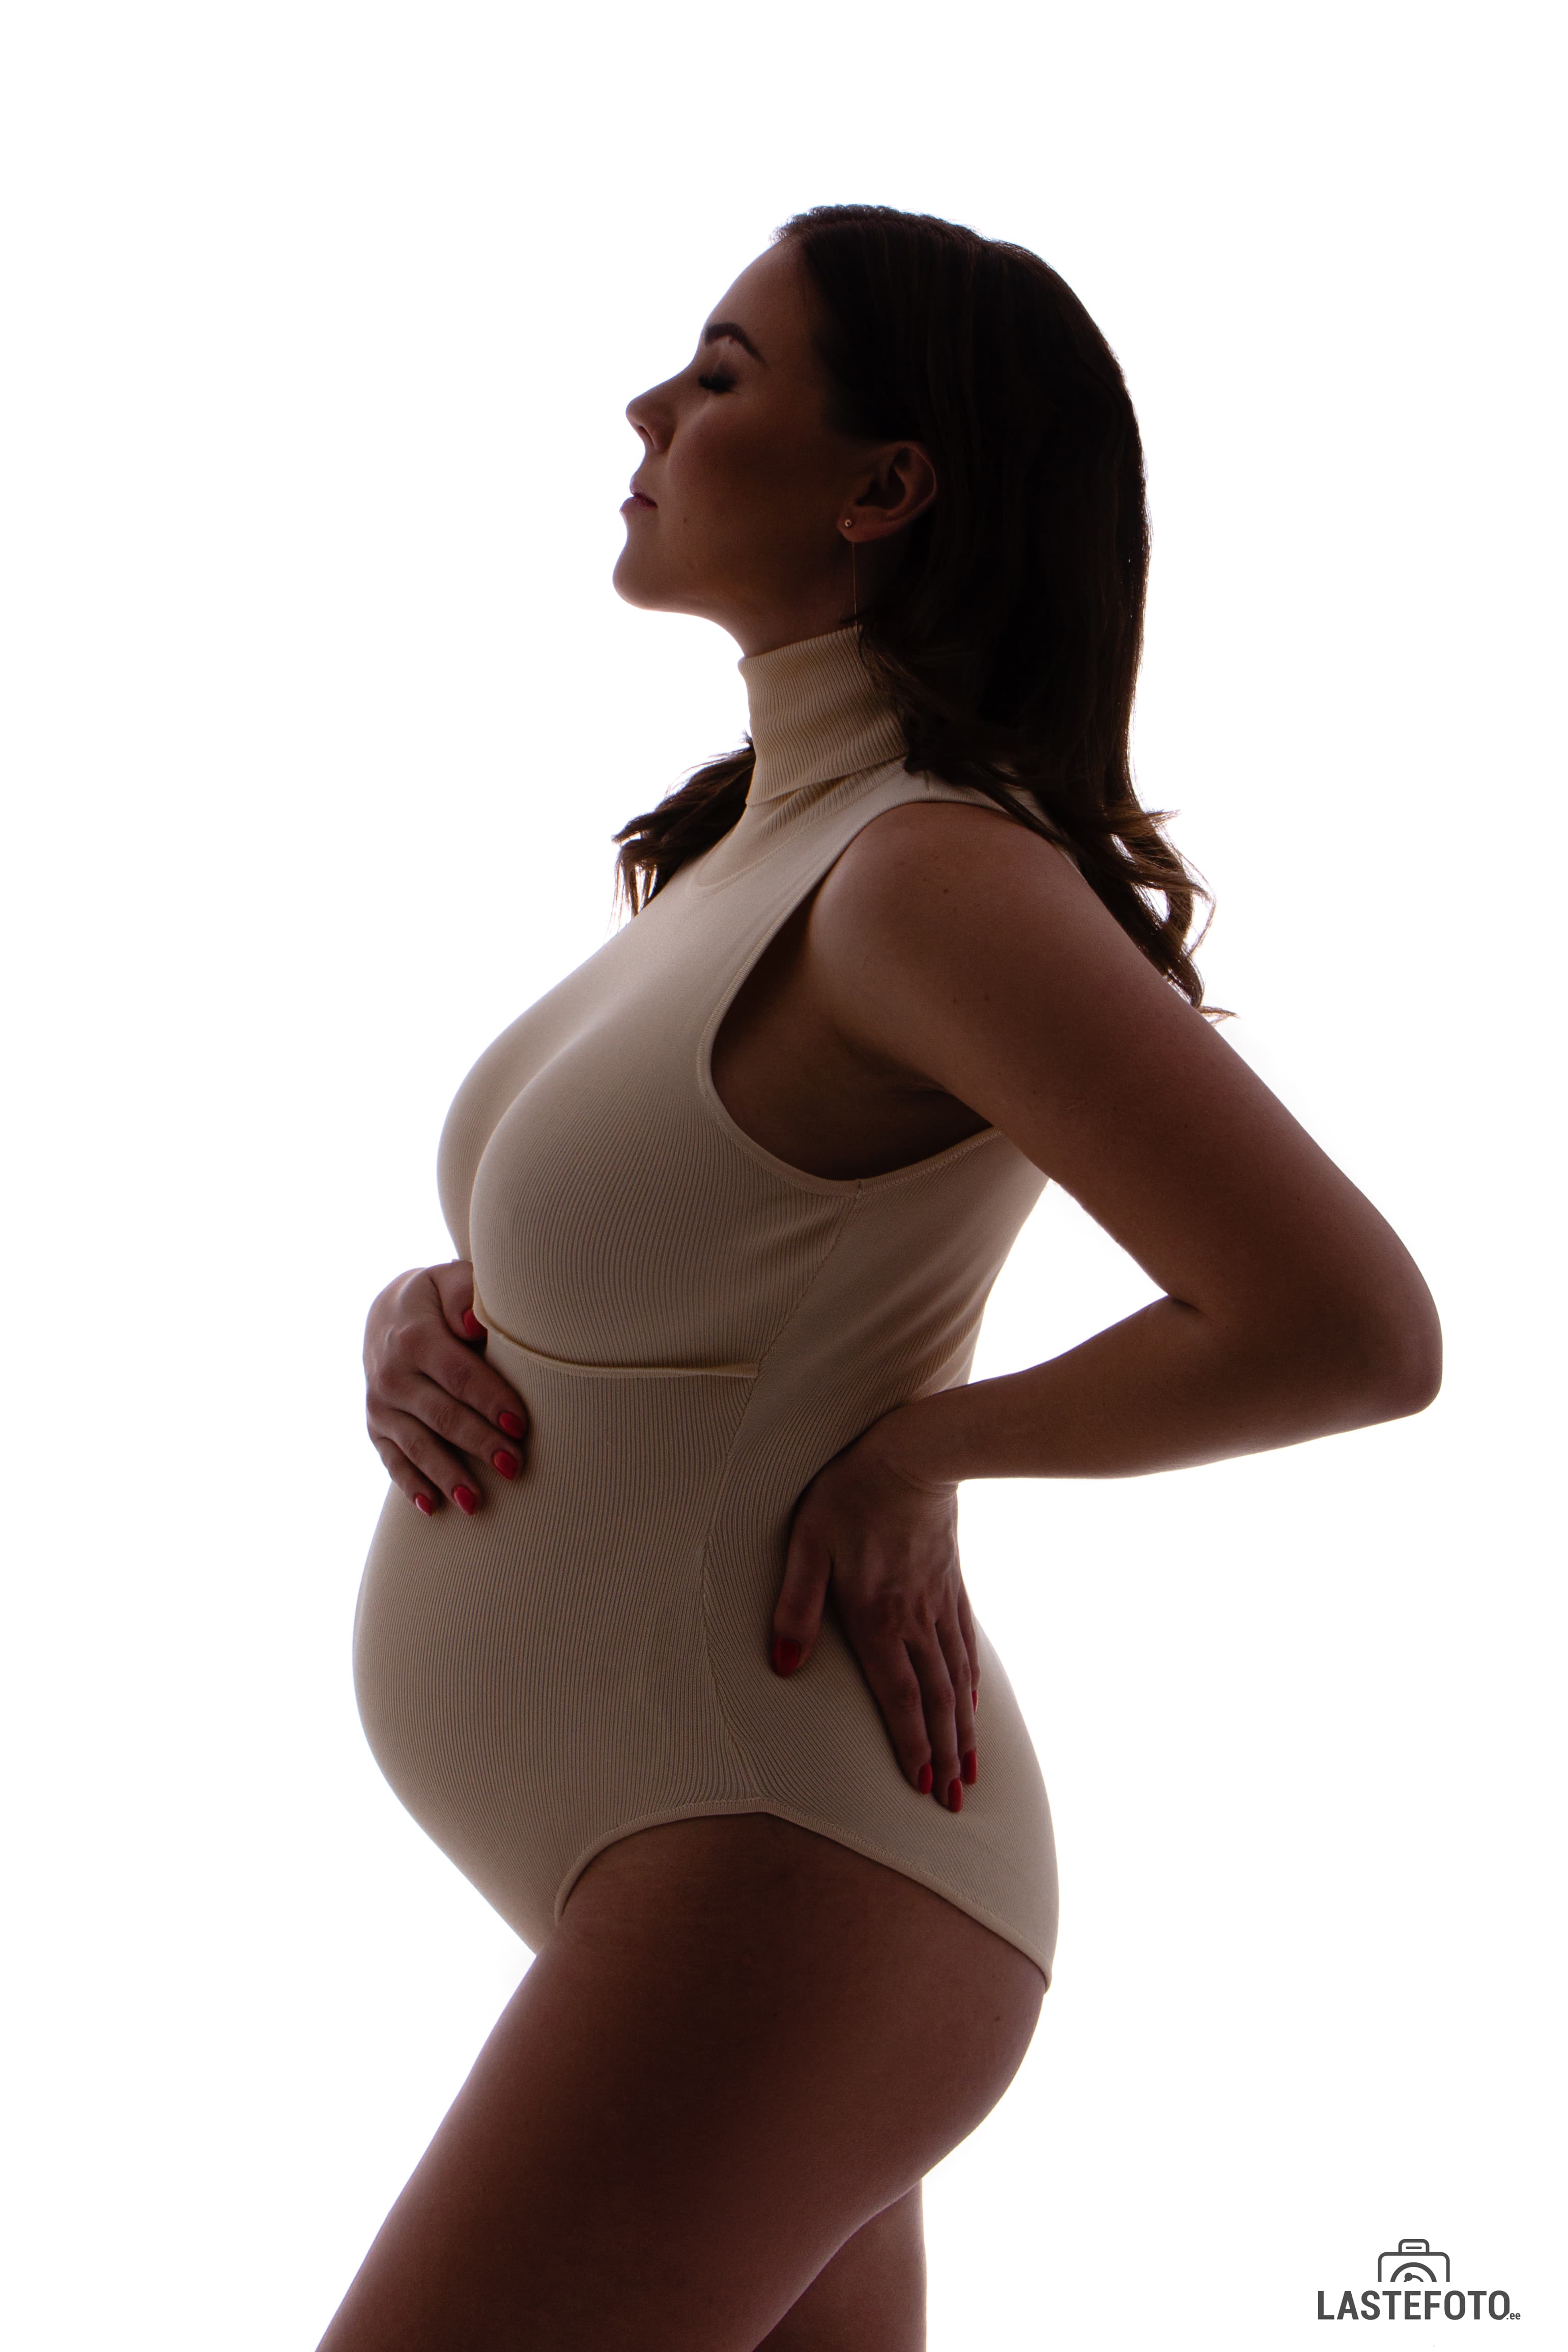 Pregnancy photo shoot in Vogue style in Tallinn